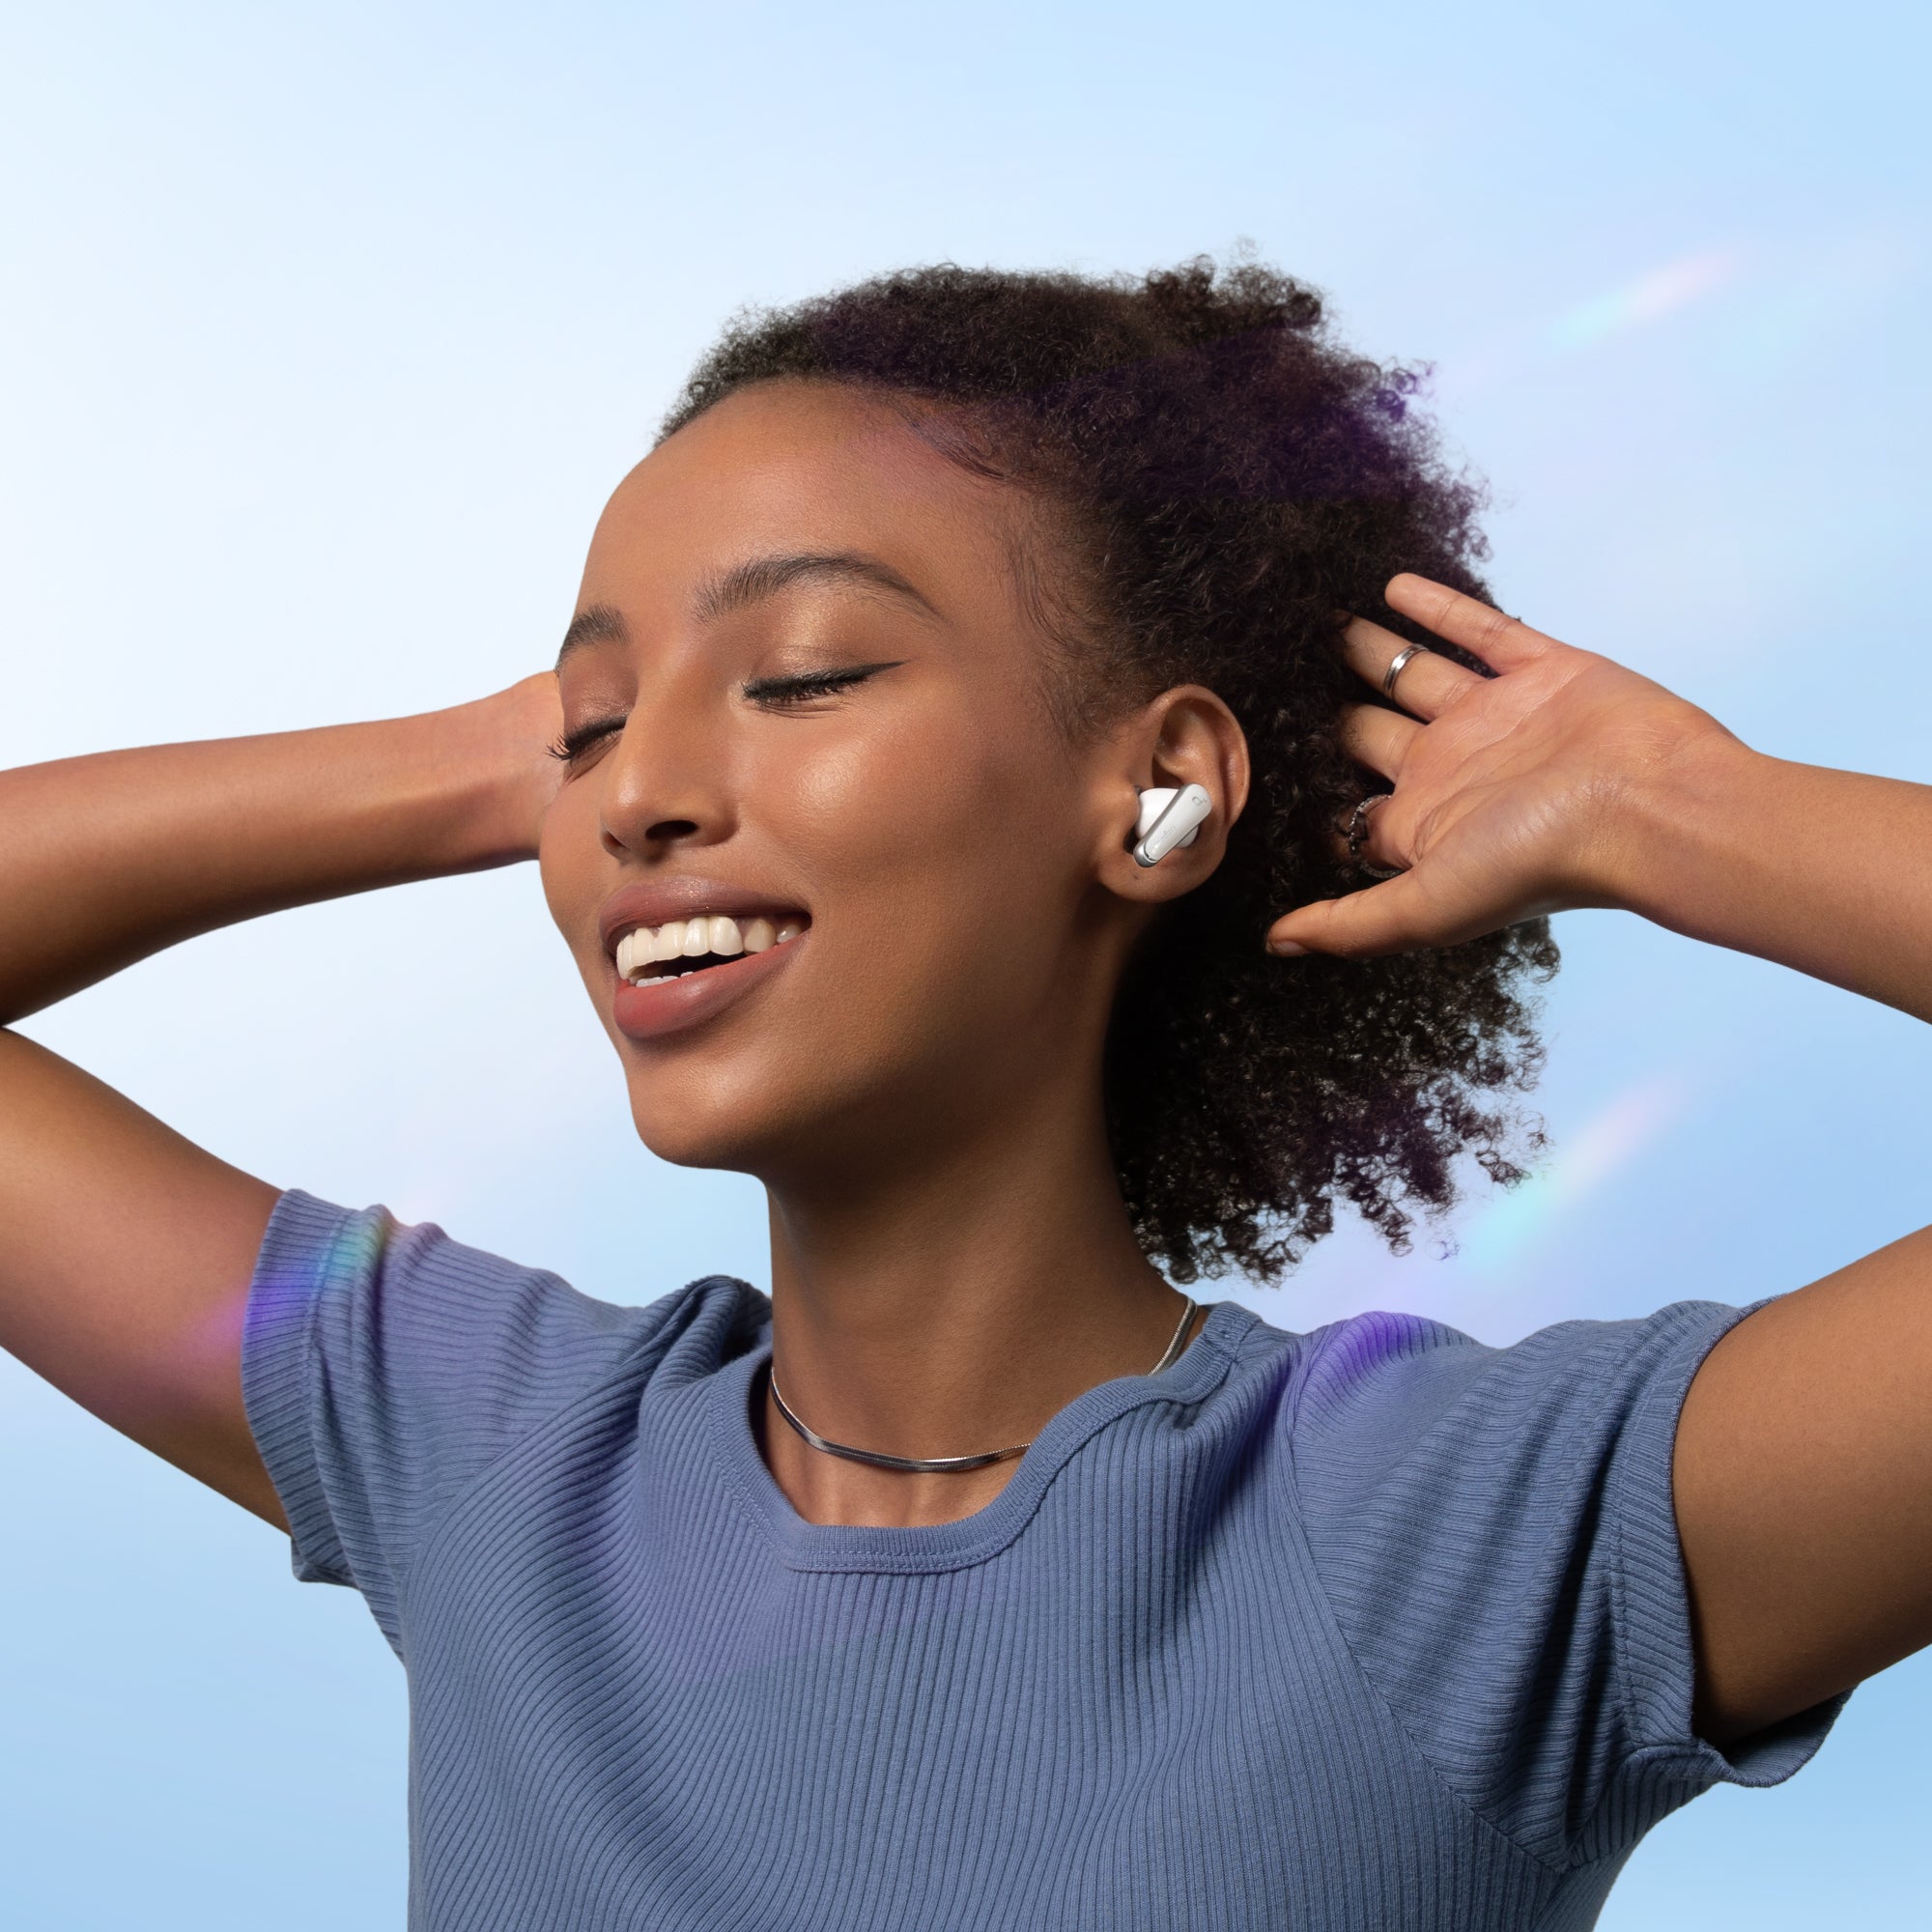 Anker Soundcore Liberty 4 Kulak İçi Bluetooth Kulaklık - Beyaz